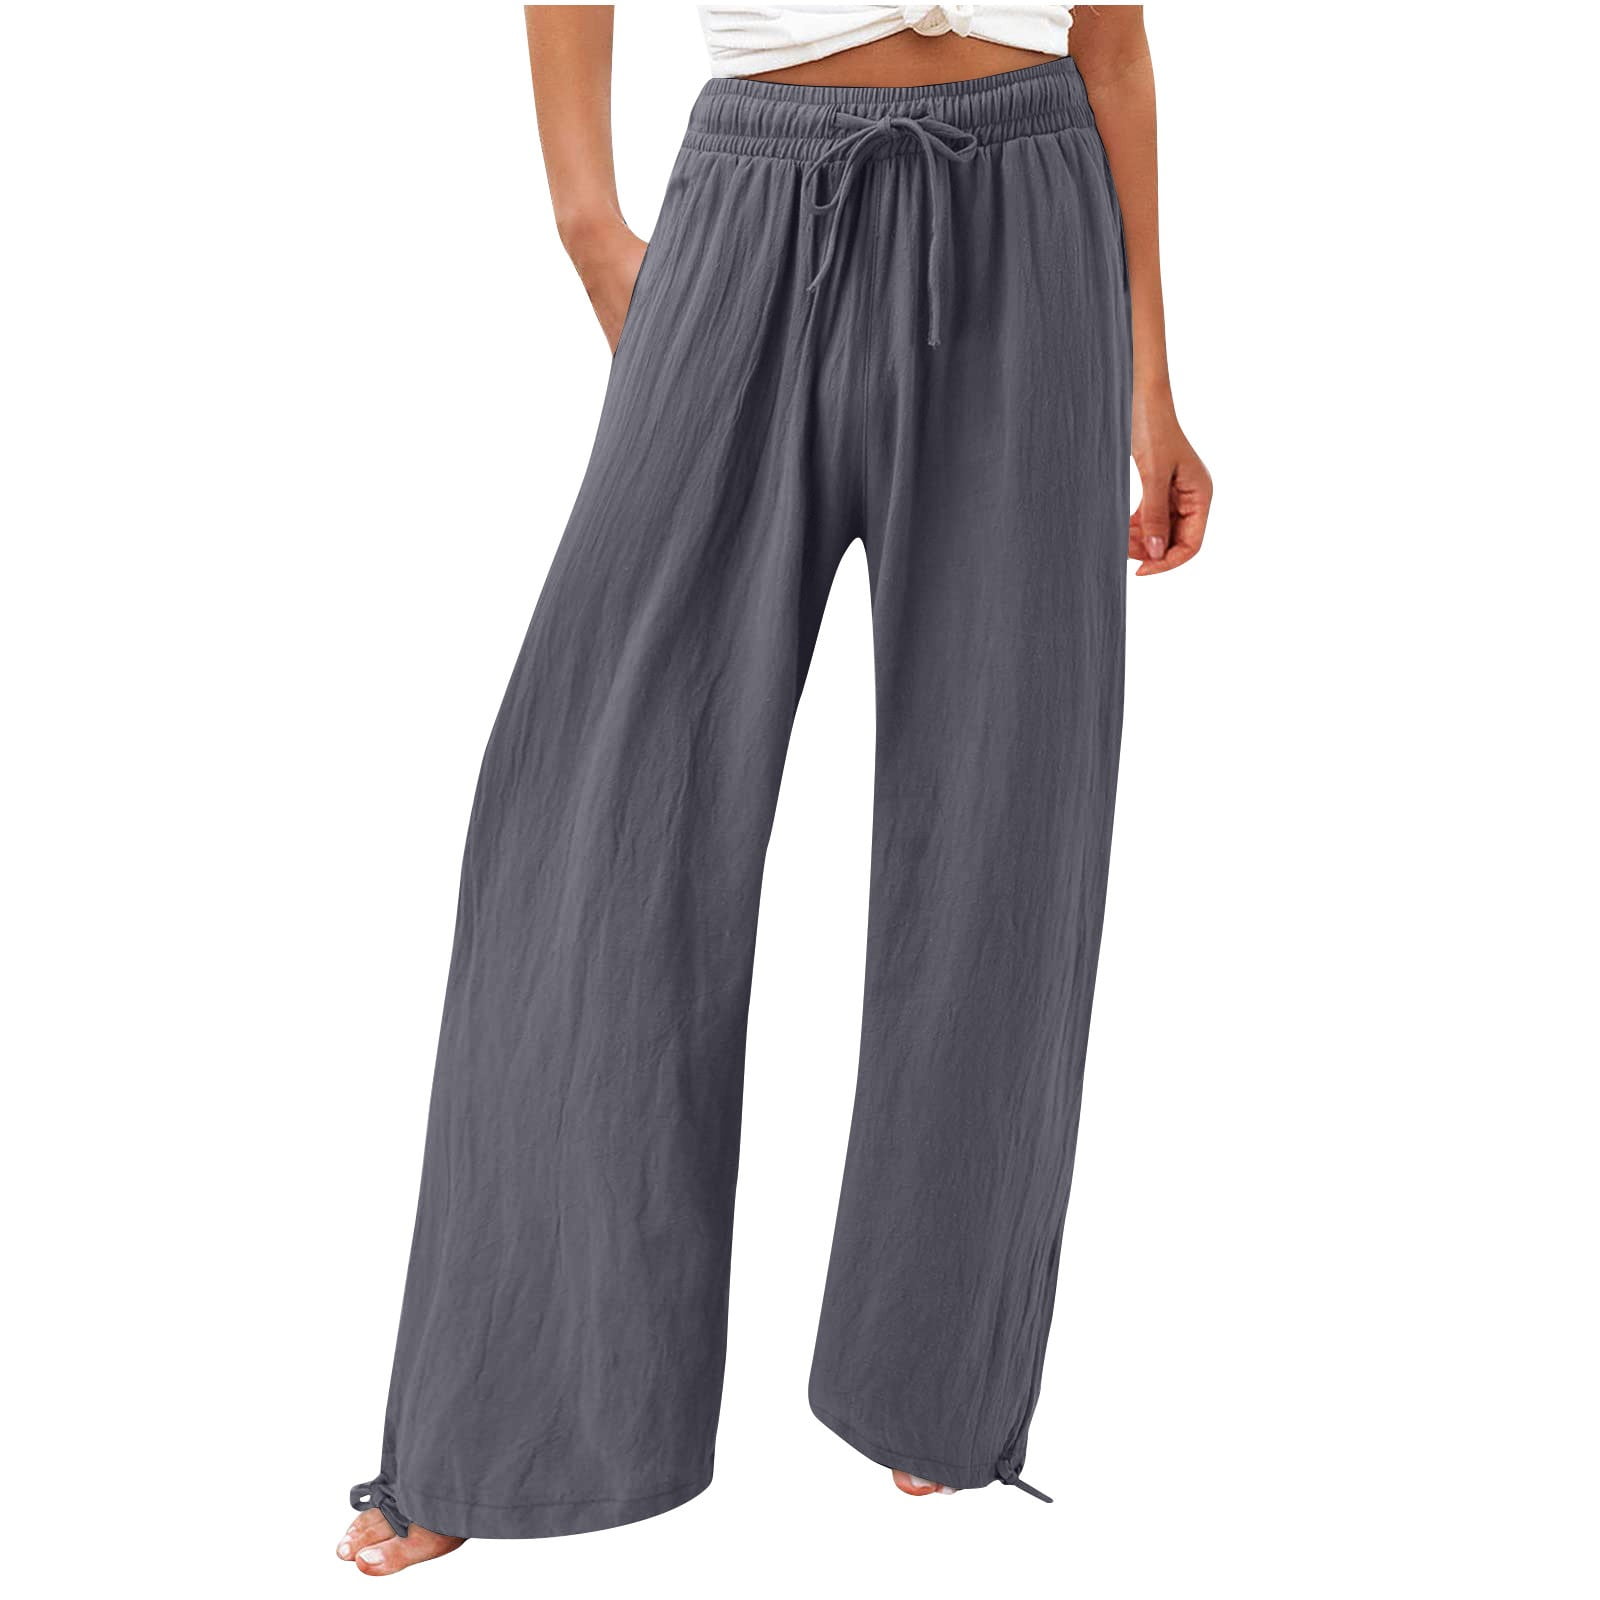 women's trousers elastic Slant Pocket Wide Leg Pants women's trousers  (Color : Light Grey, Size : Petite S) : Buy Online at Best Price in KSA -  Souq is now : Fashion